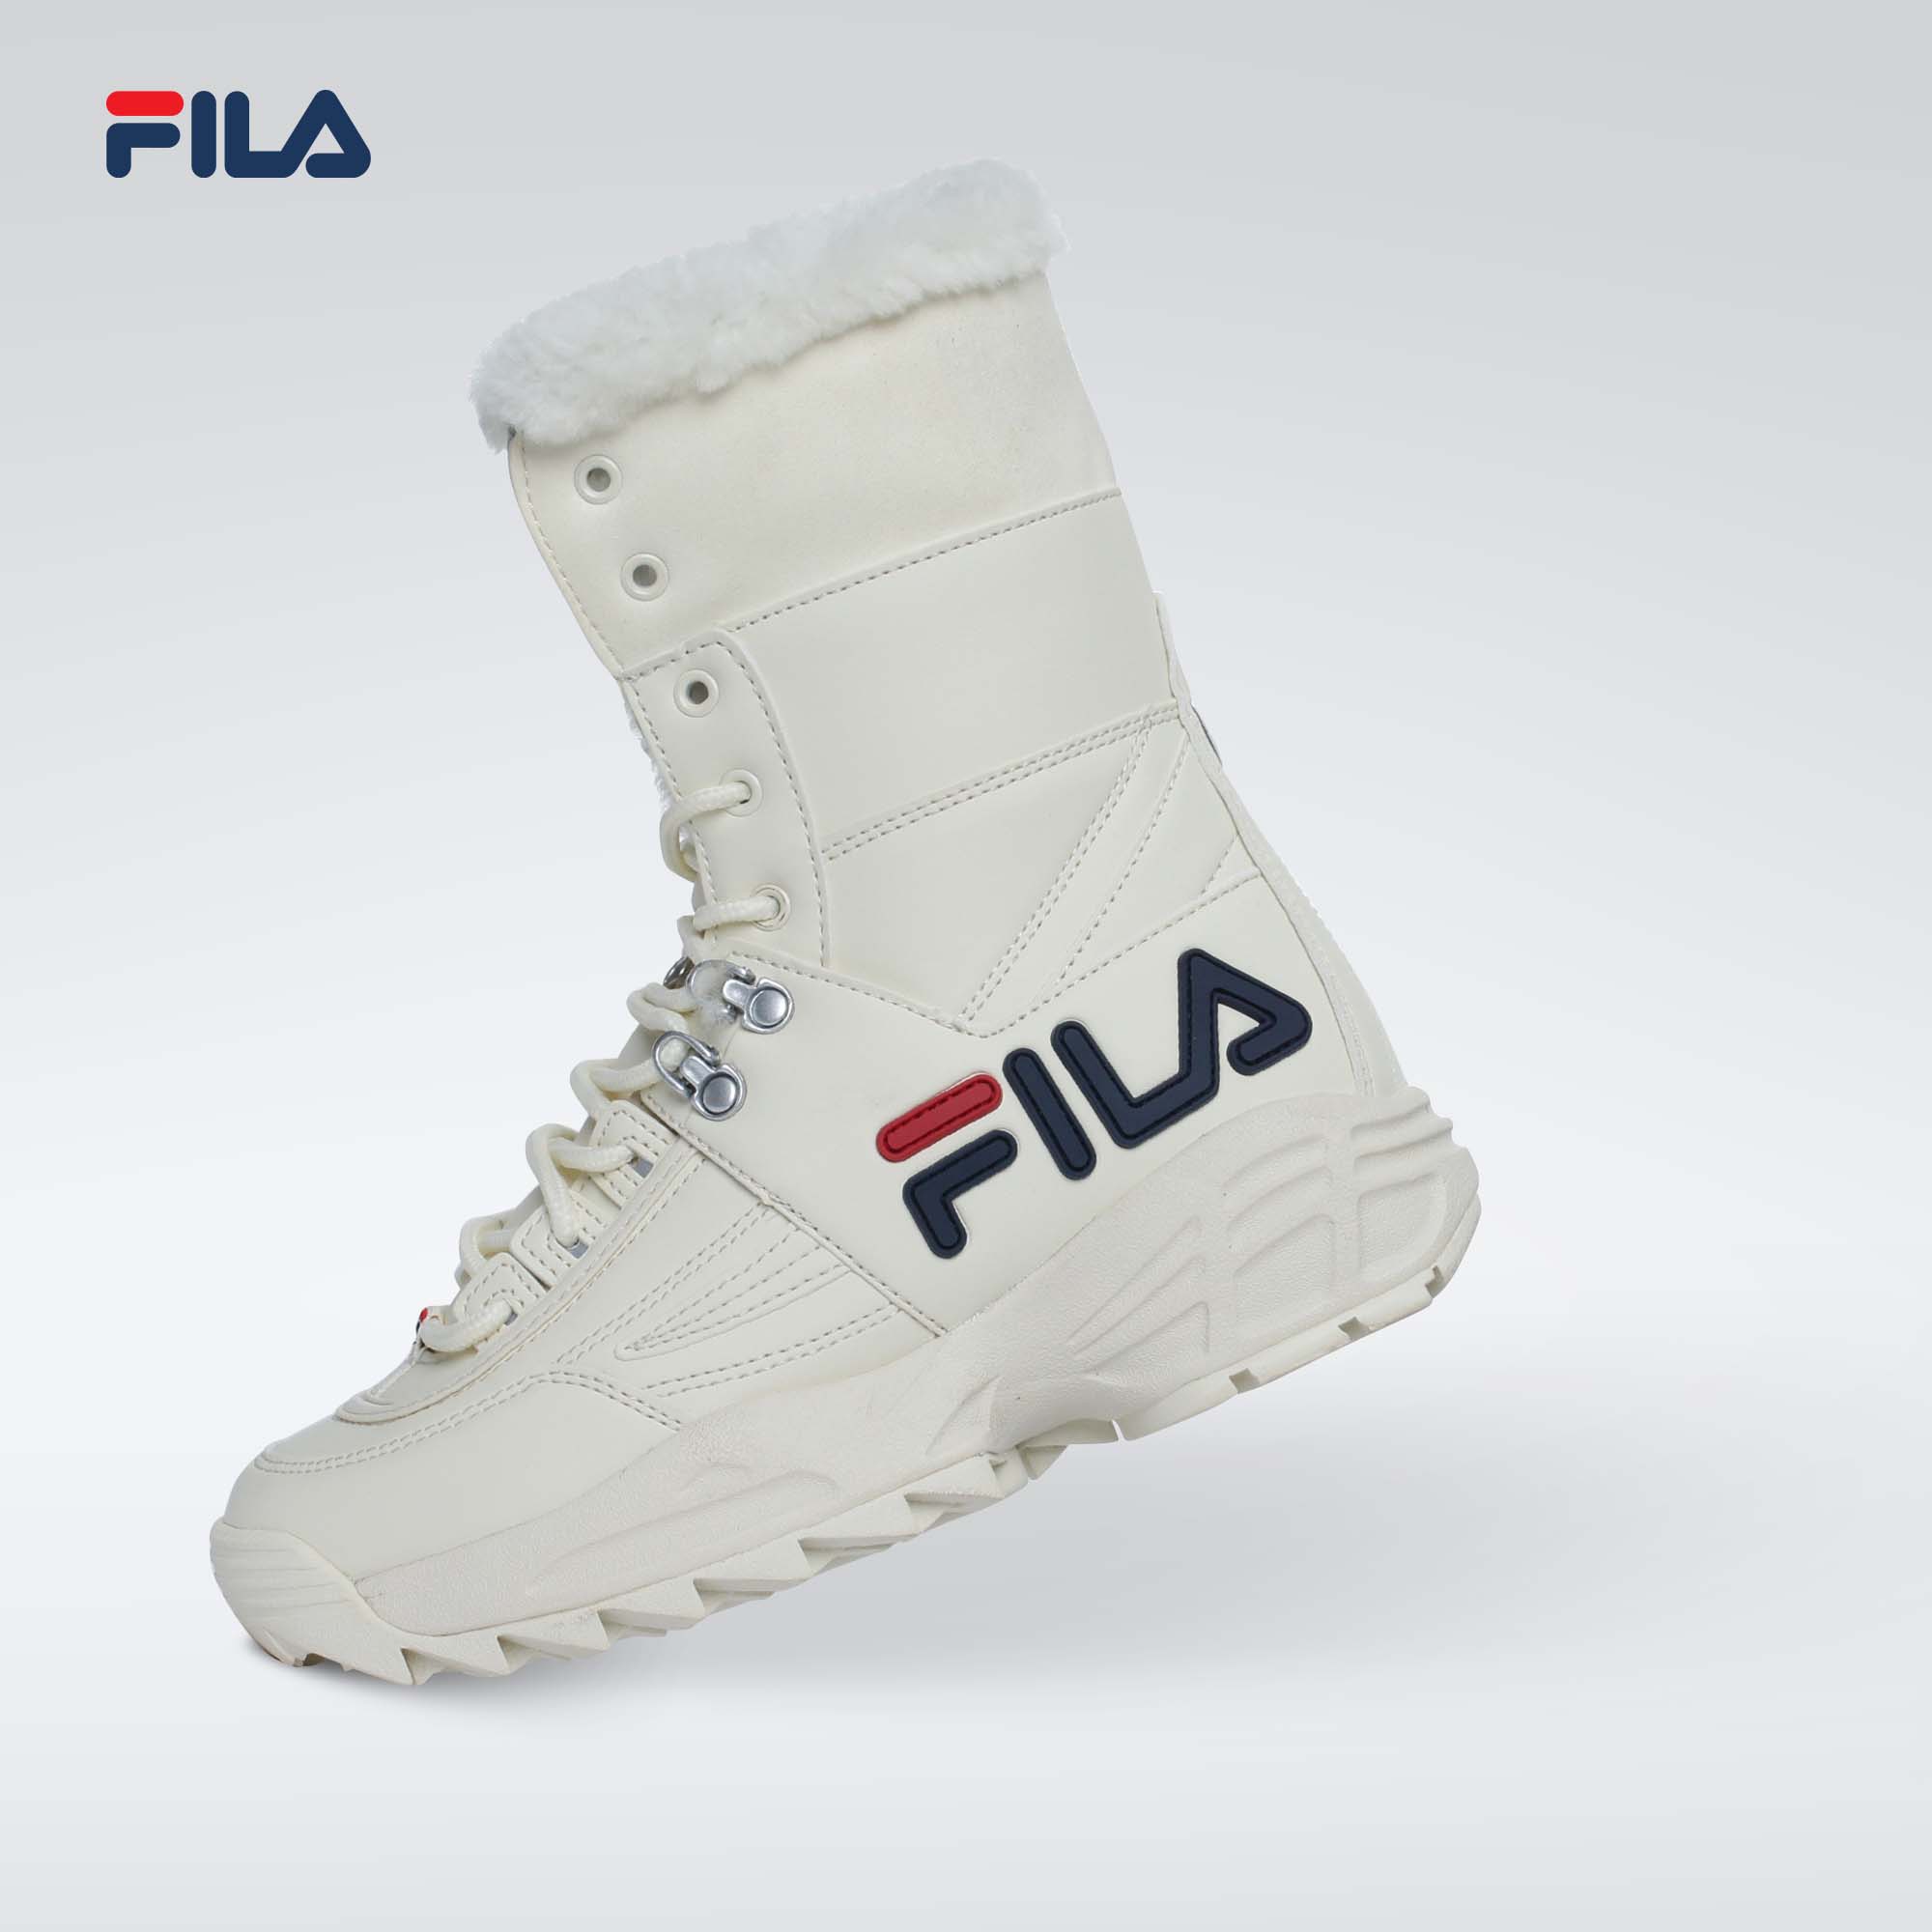 fila winter boots